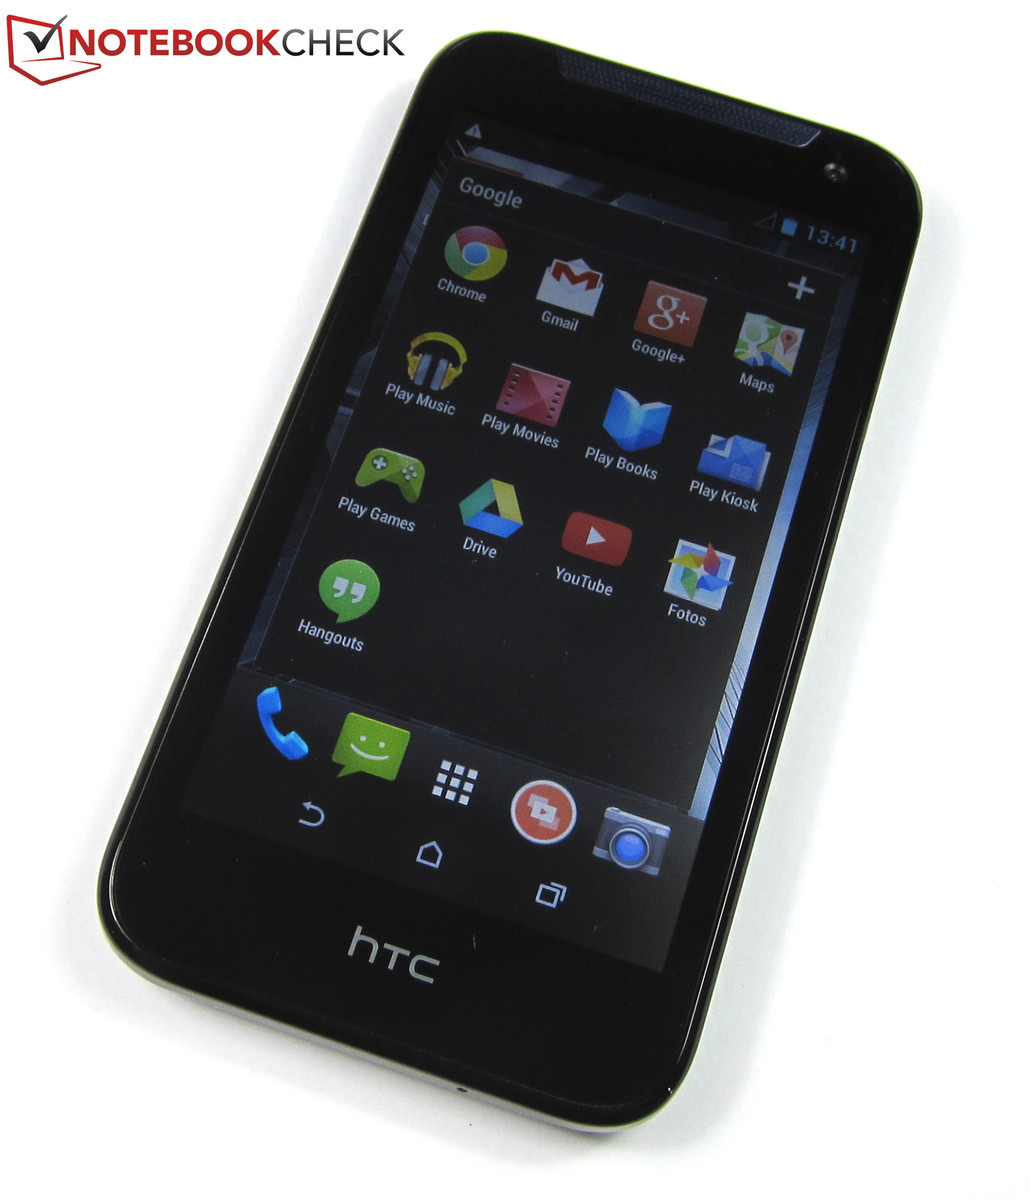 Sophie Monet Environmentalist HTC Desire 310 Smartphone Review - NotebookCheck.net Reviews